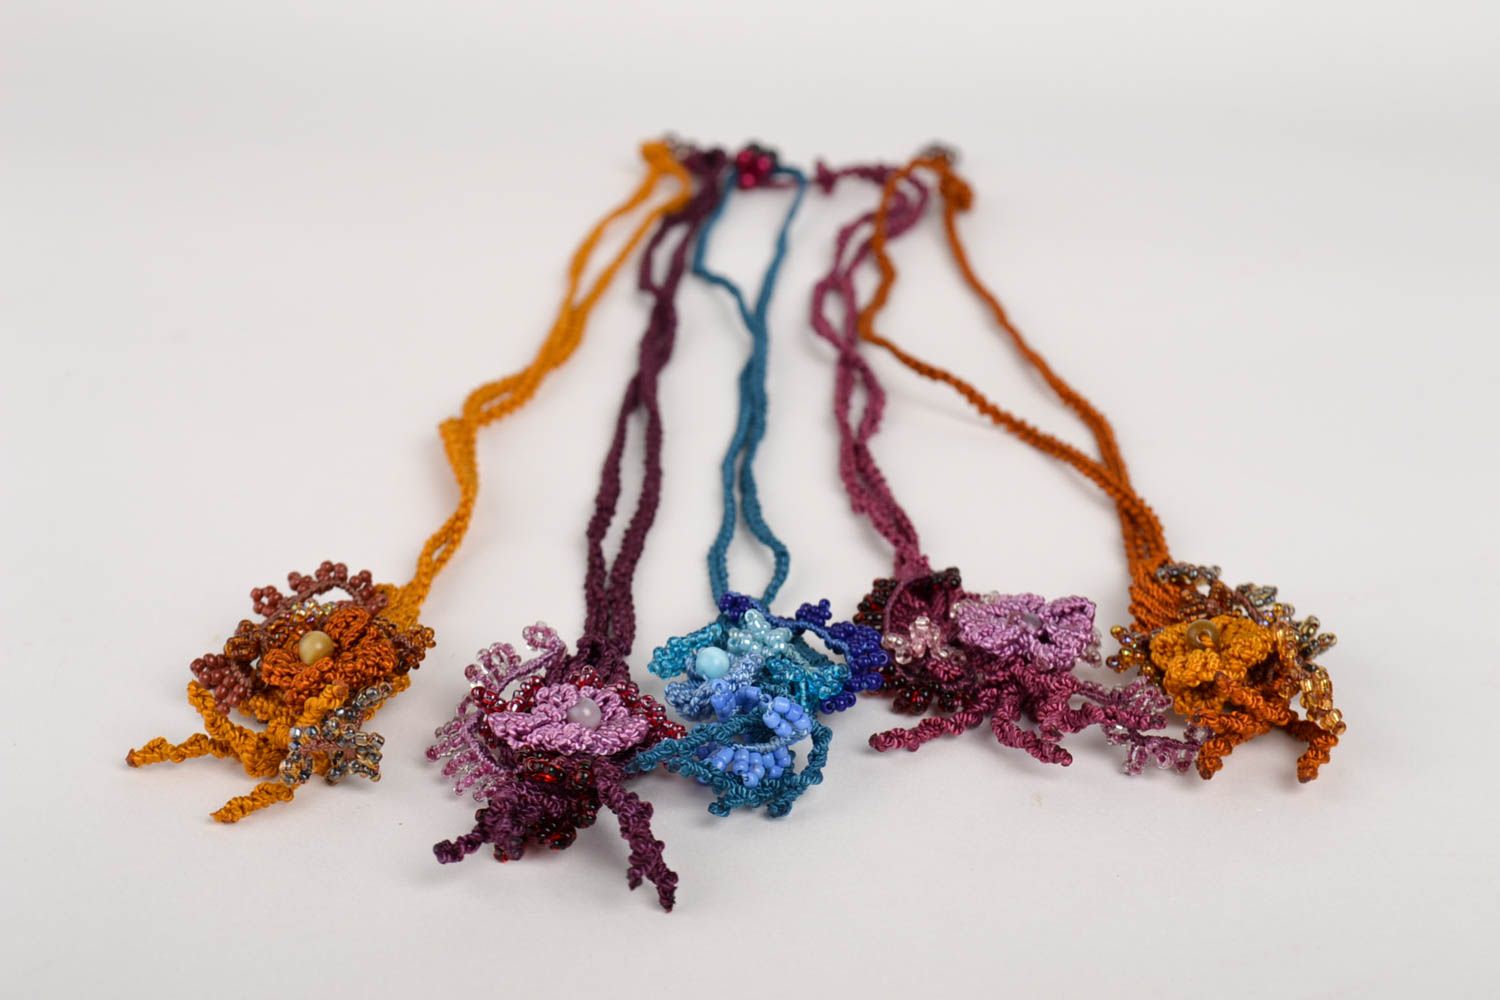 Handmade pendant fashion thread jewelry 5 pieces gift for women macrame ideas photo 2